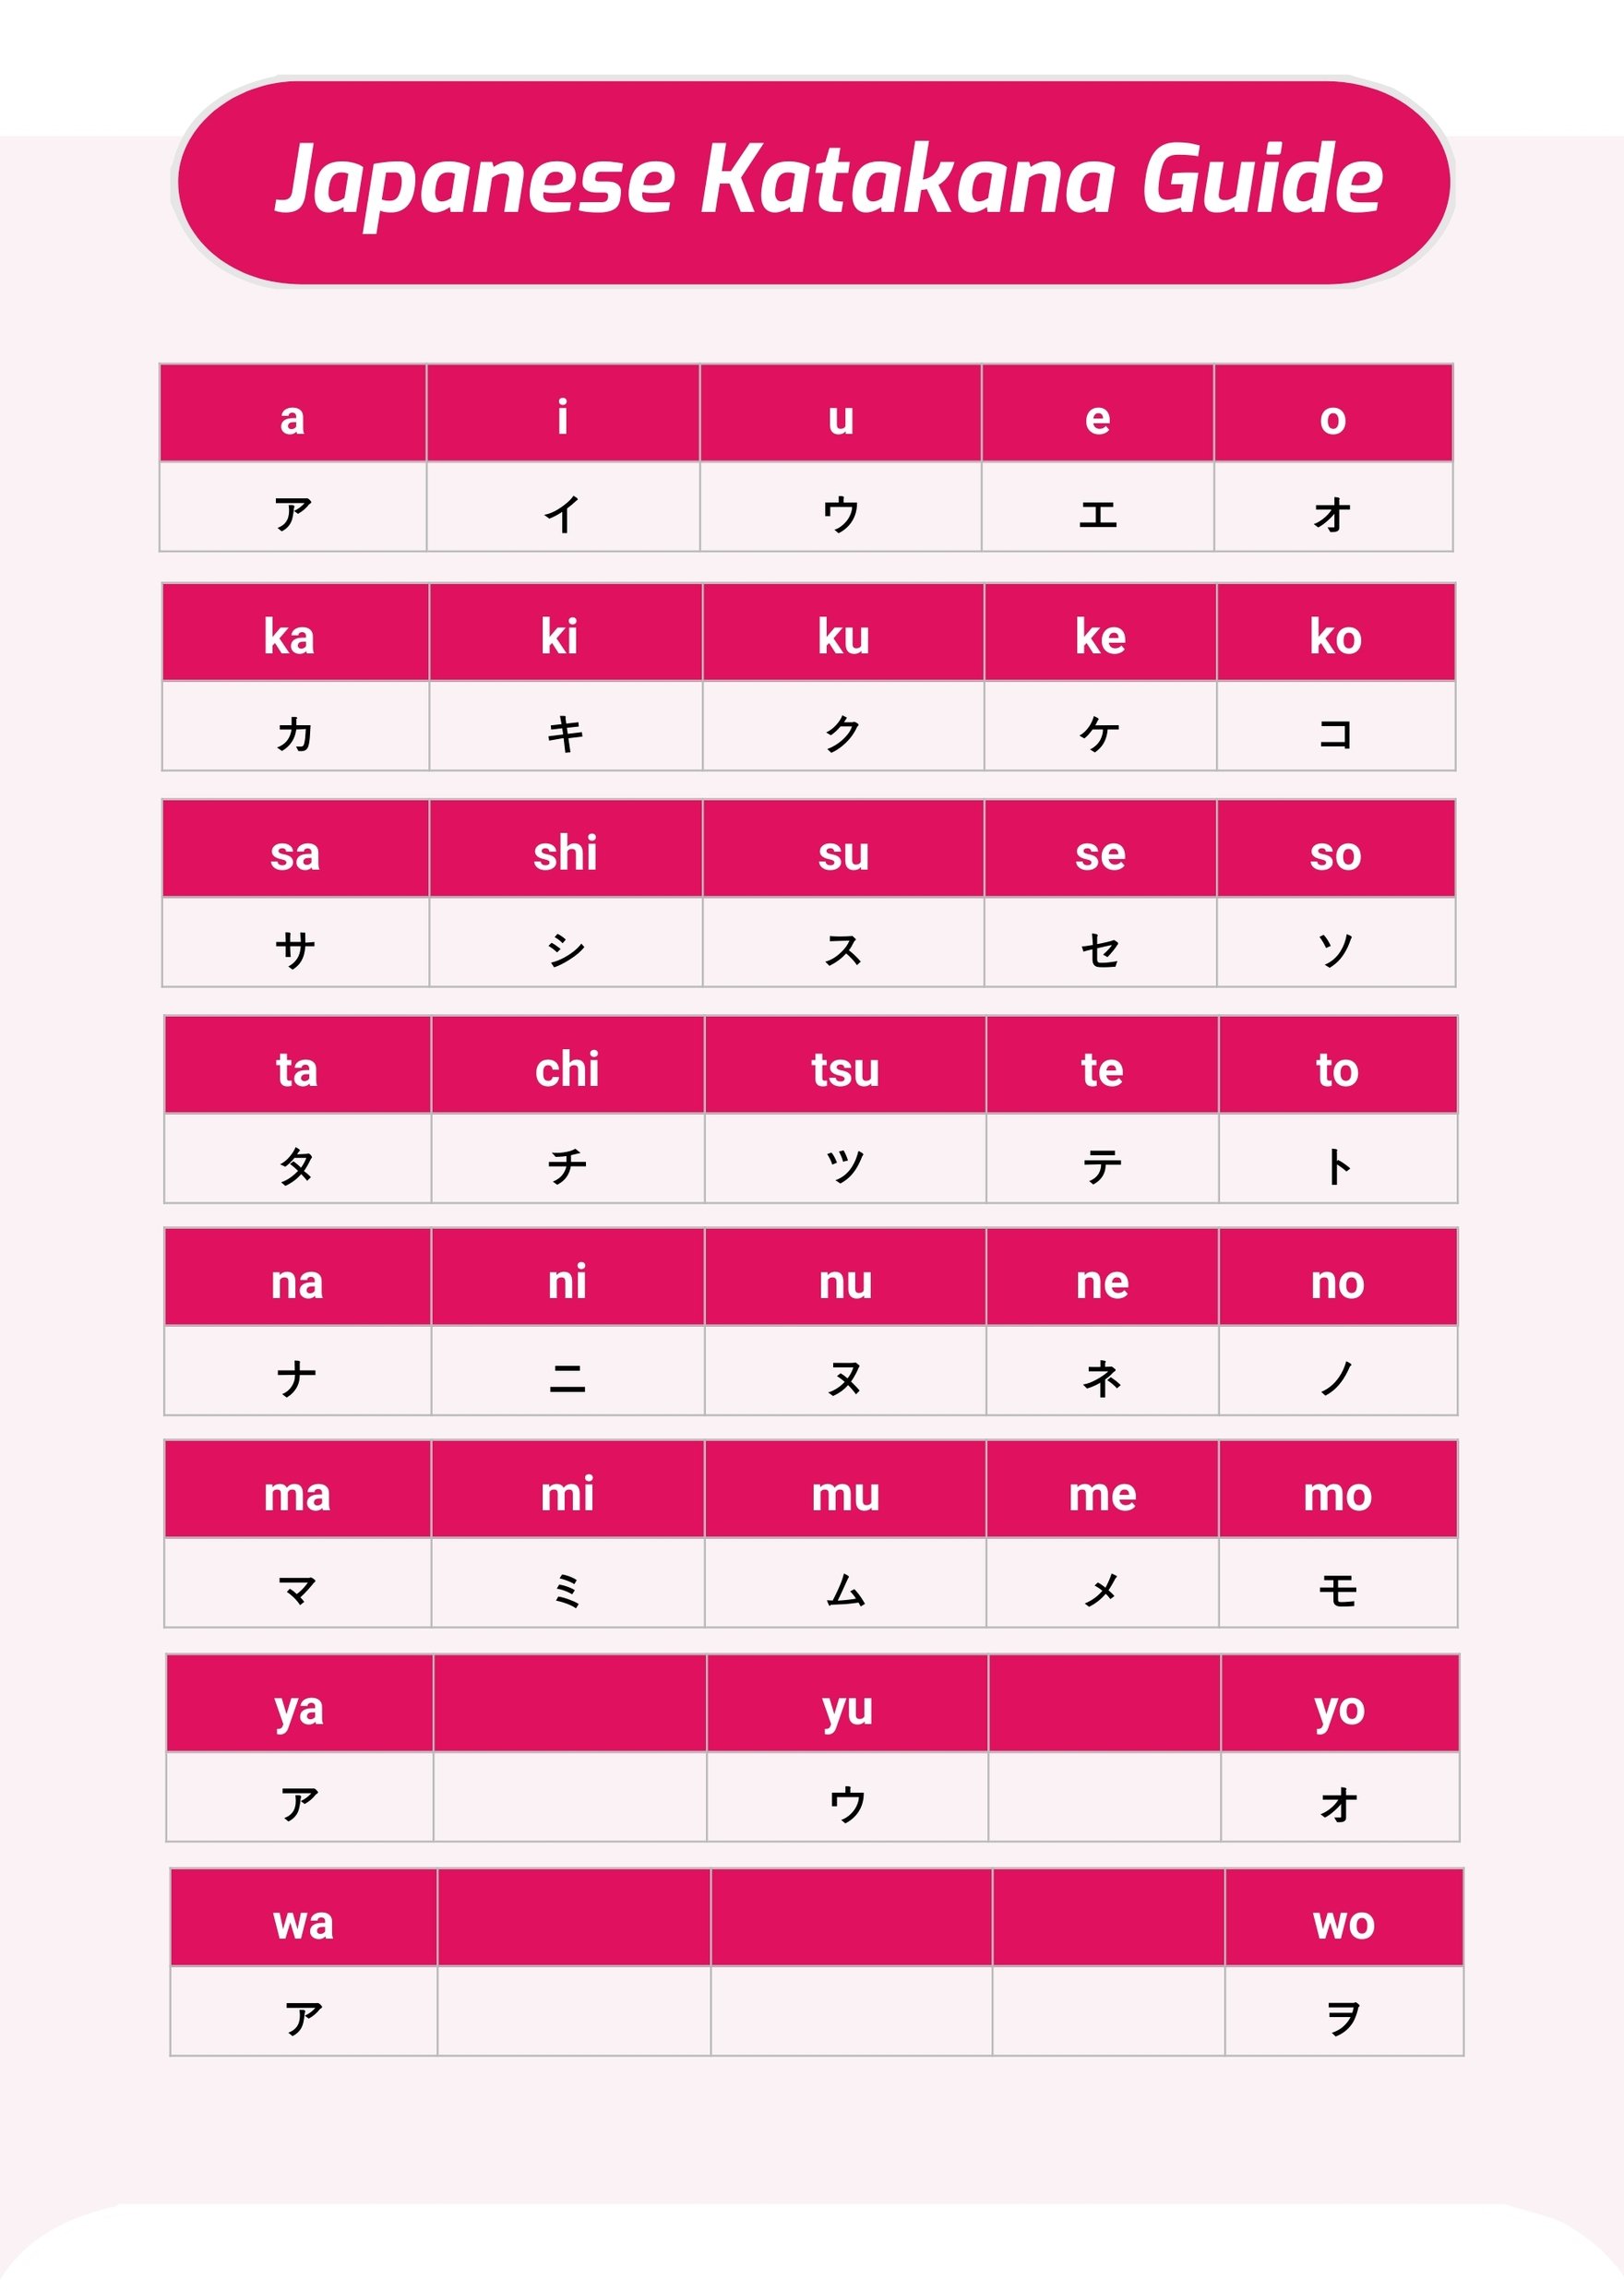 Katakana Reference Chart in PDF, Illustrator